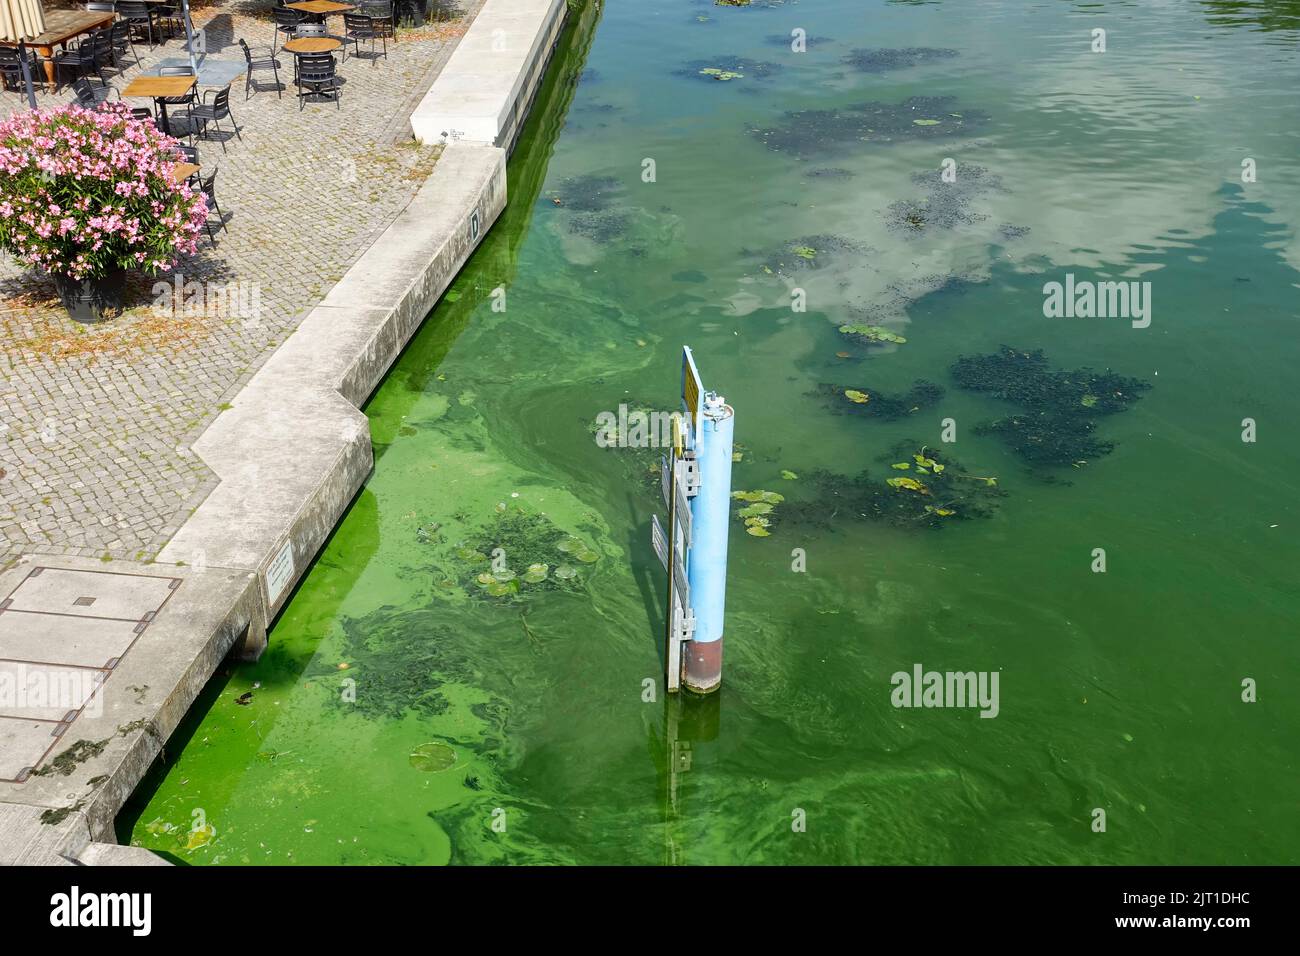 Algae in the river, Brandenburg an der Havel, Germany Stock Photo